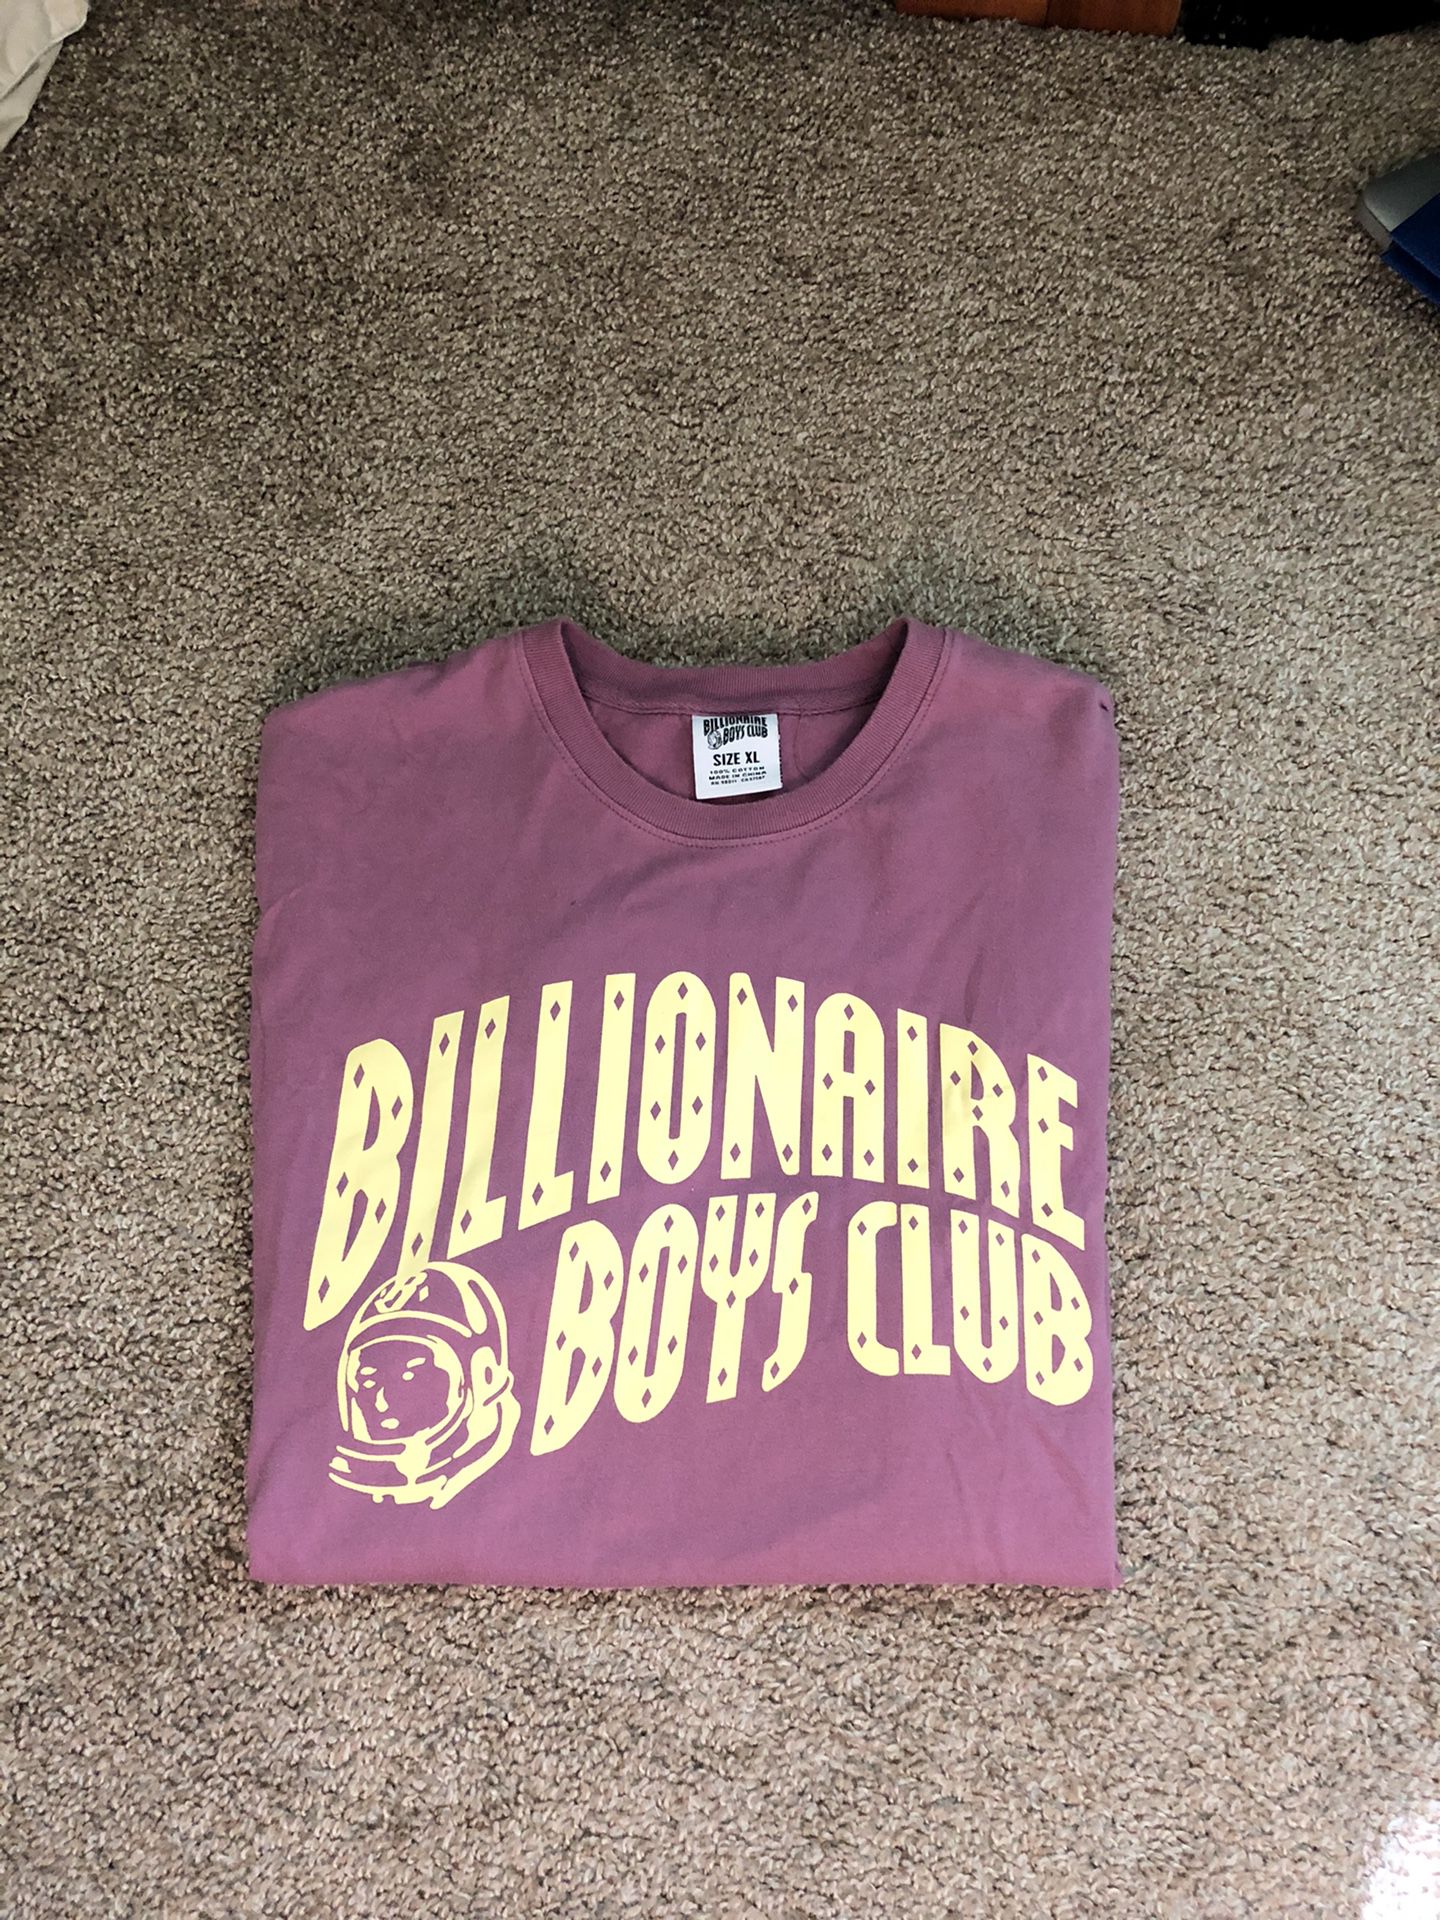 billionaire boys club shirt (size extra large)